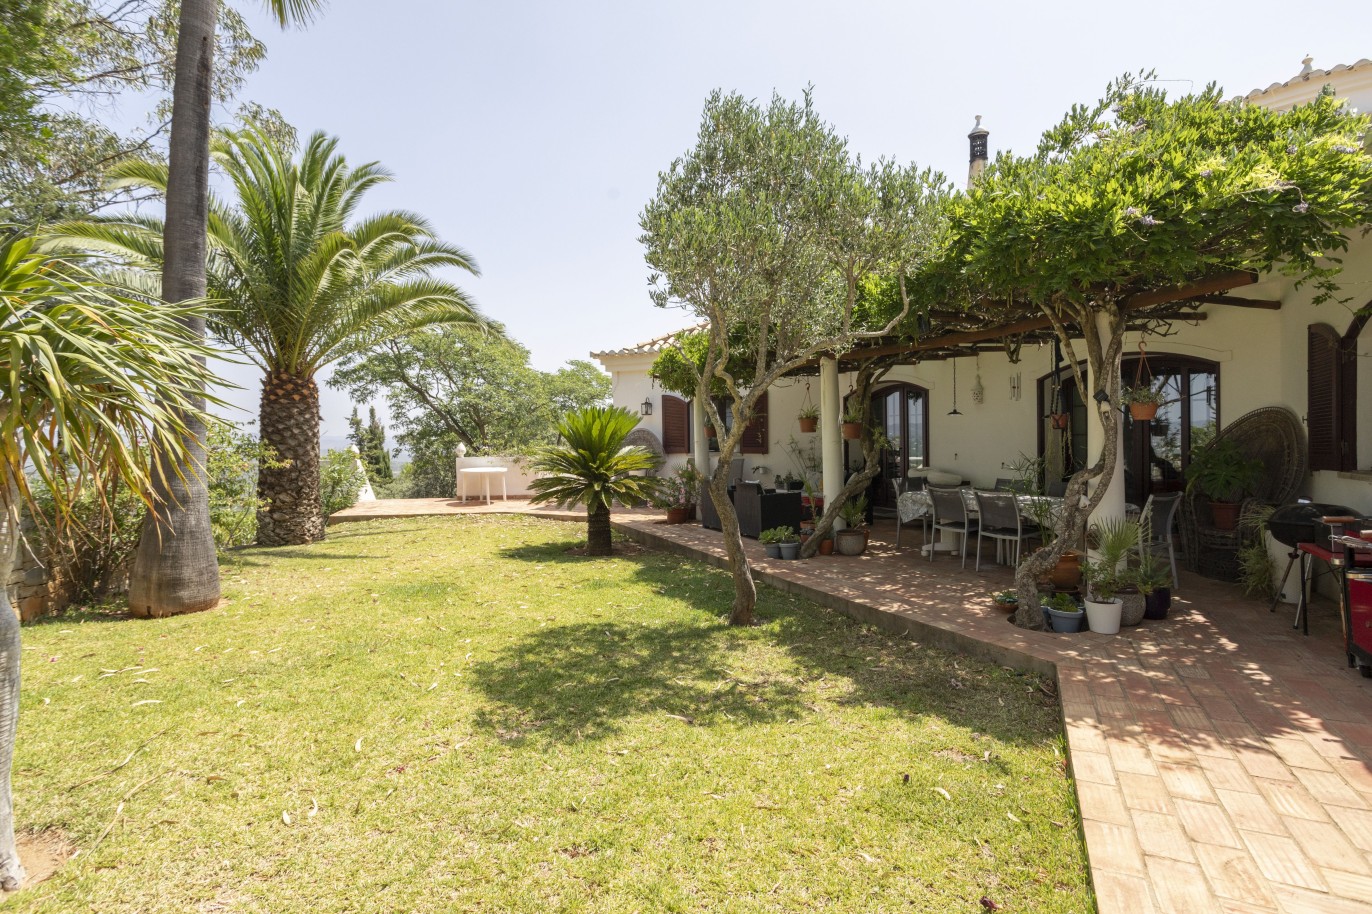 7 Bed Country Villa with swimming pool for sale in Estoi, Algarve_230968